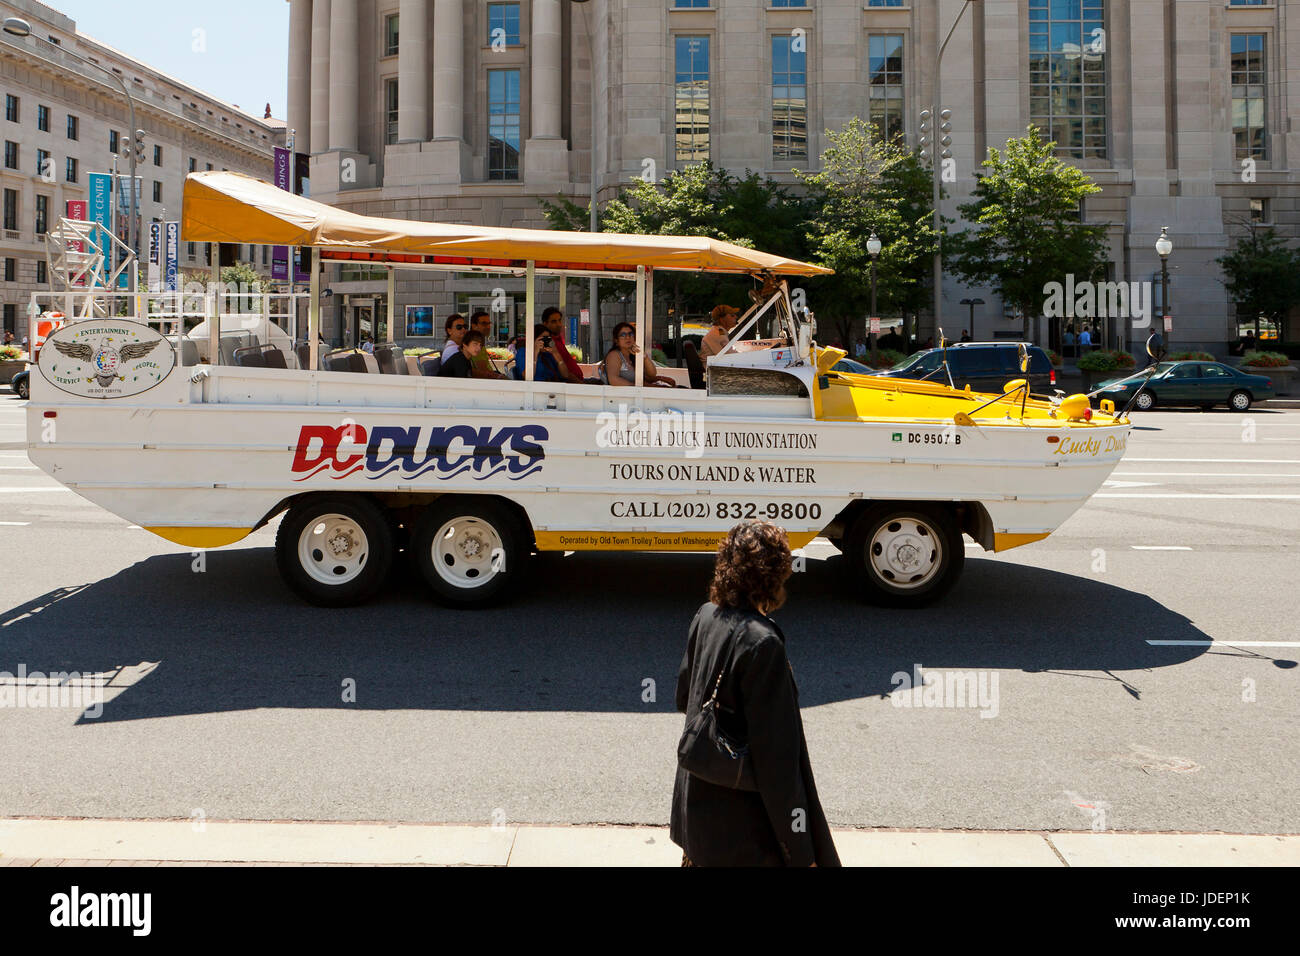 DC Ducks tour bus / barco / Vehículo anfibio - Washington, DC, EE.UU. Foto de stock